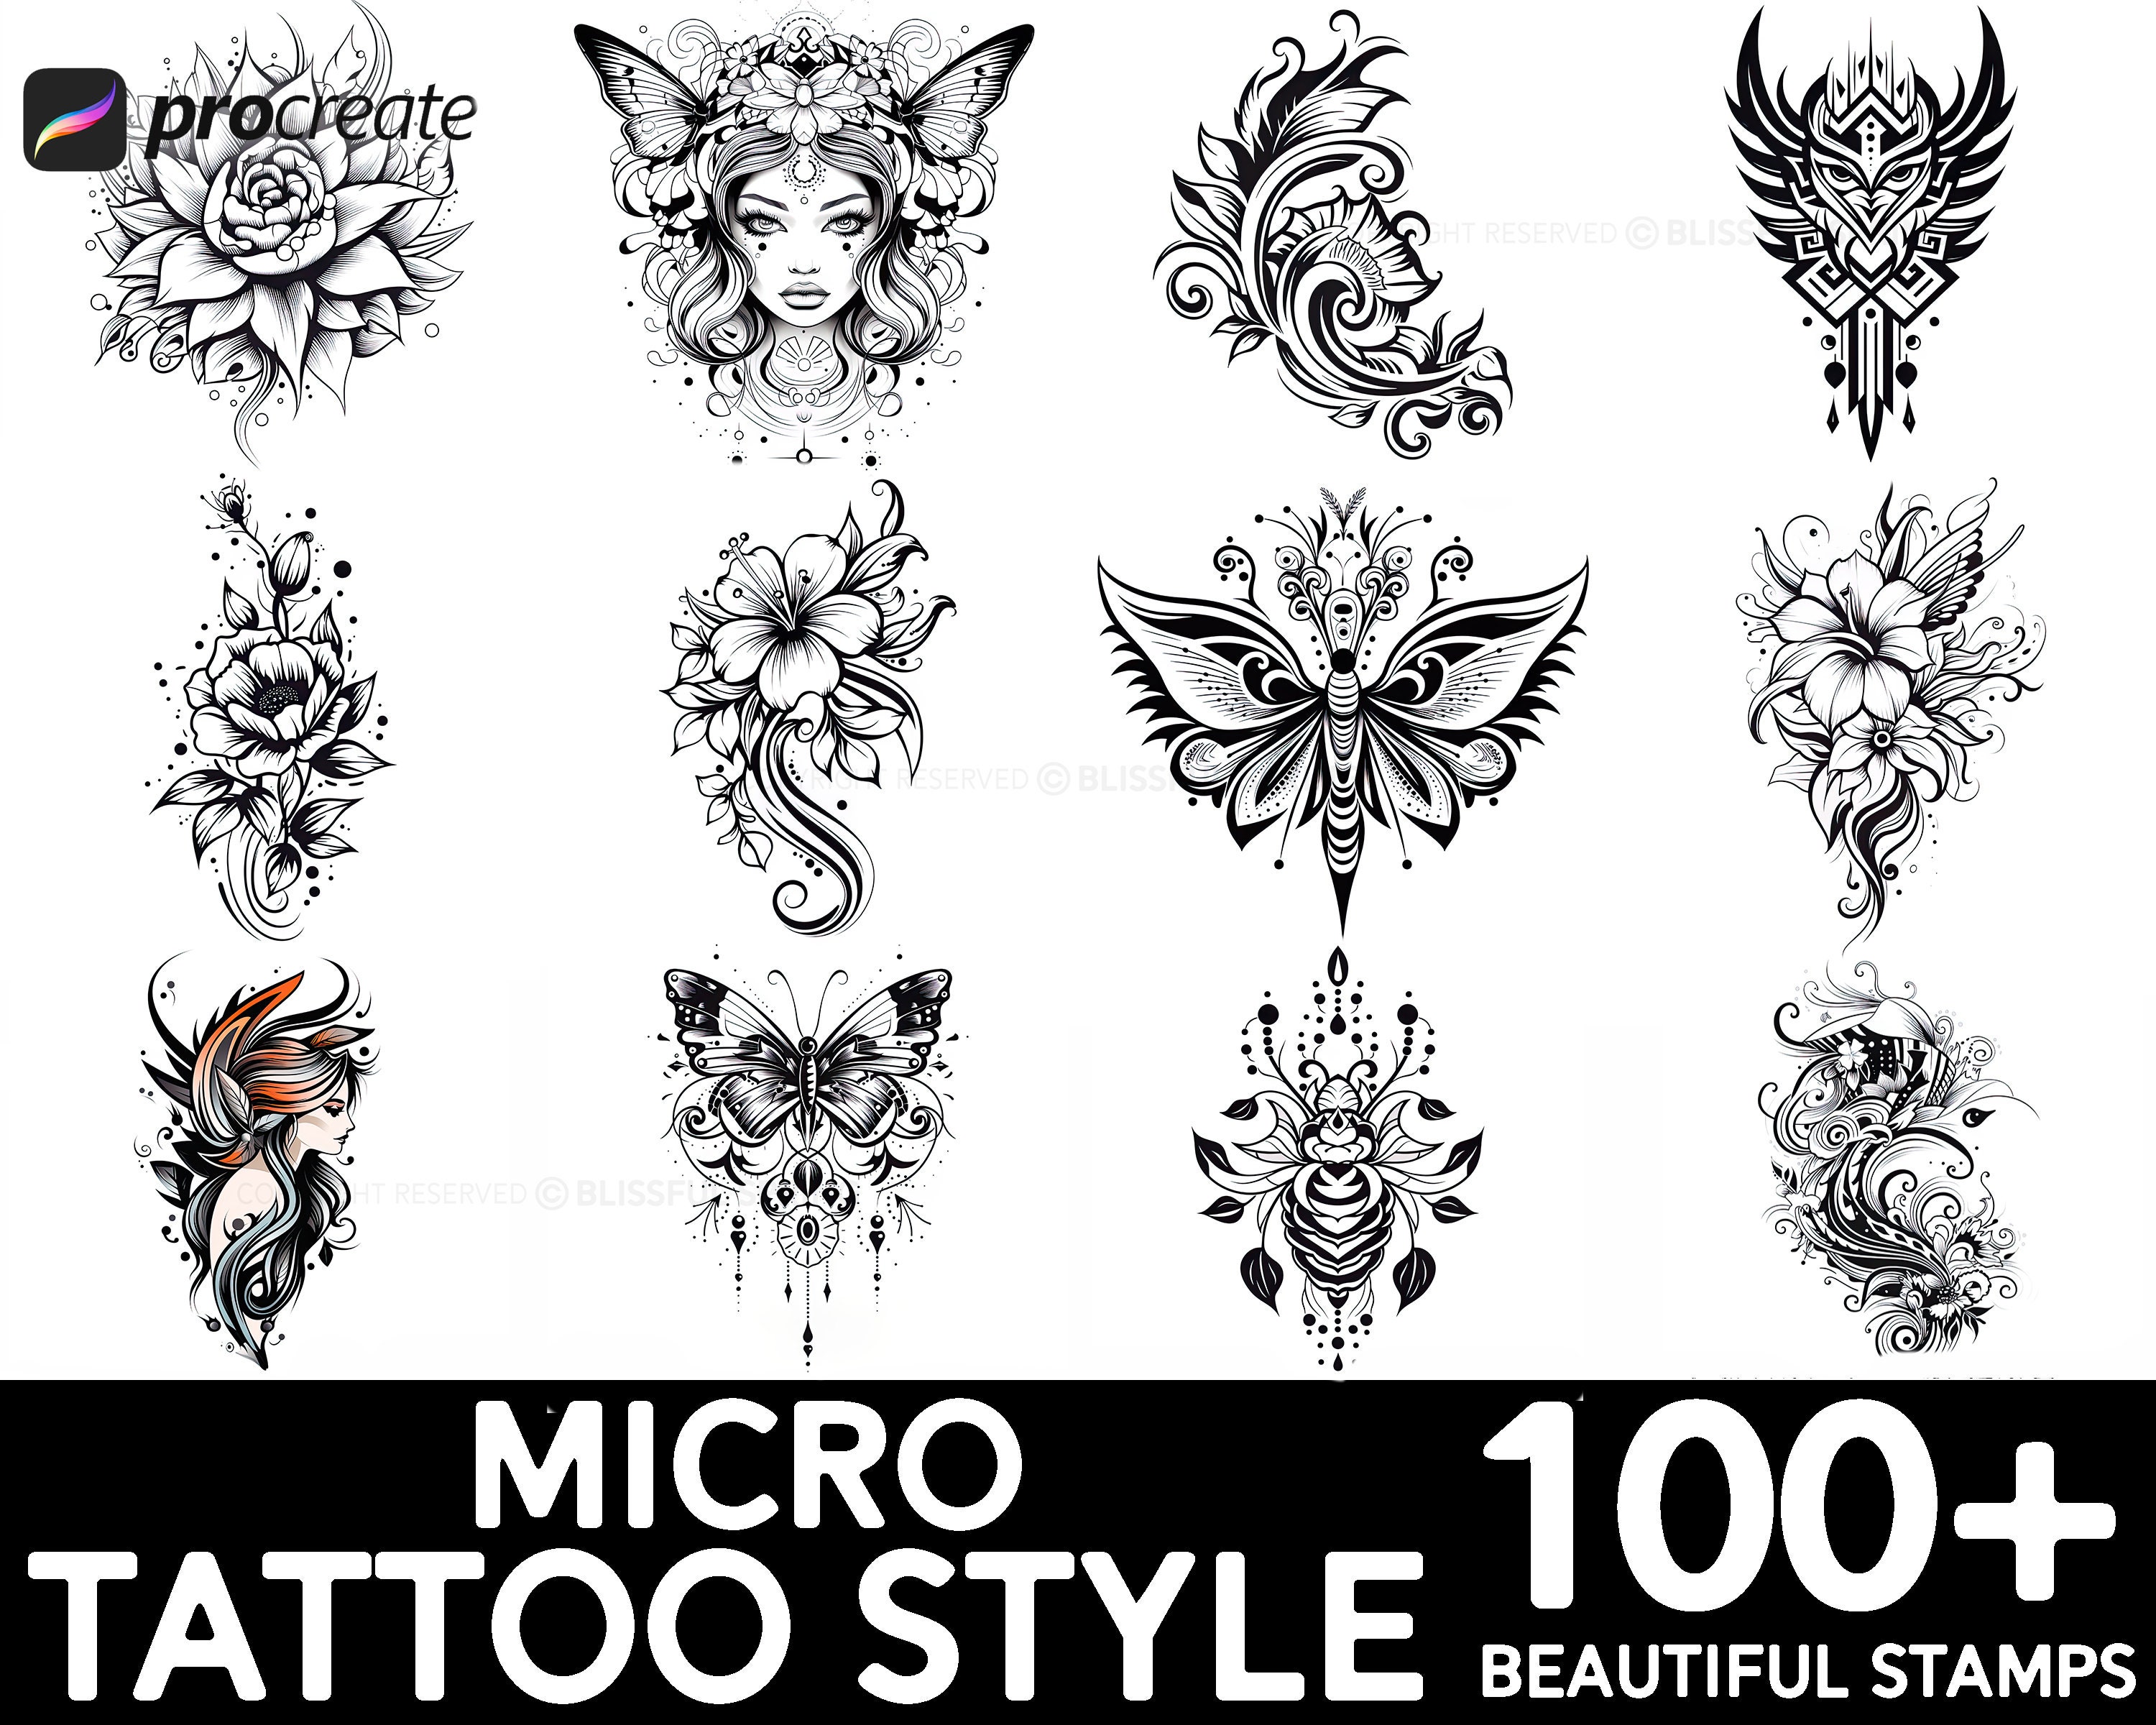 Mike4tats: I will make a tattoo stencil for $15 on